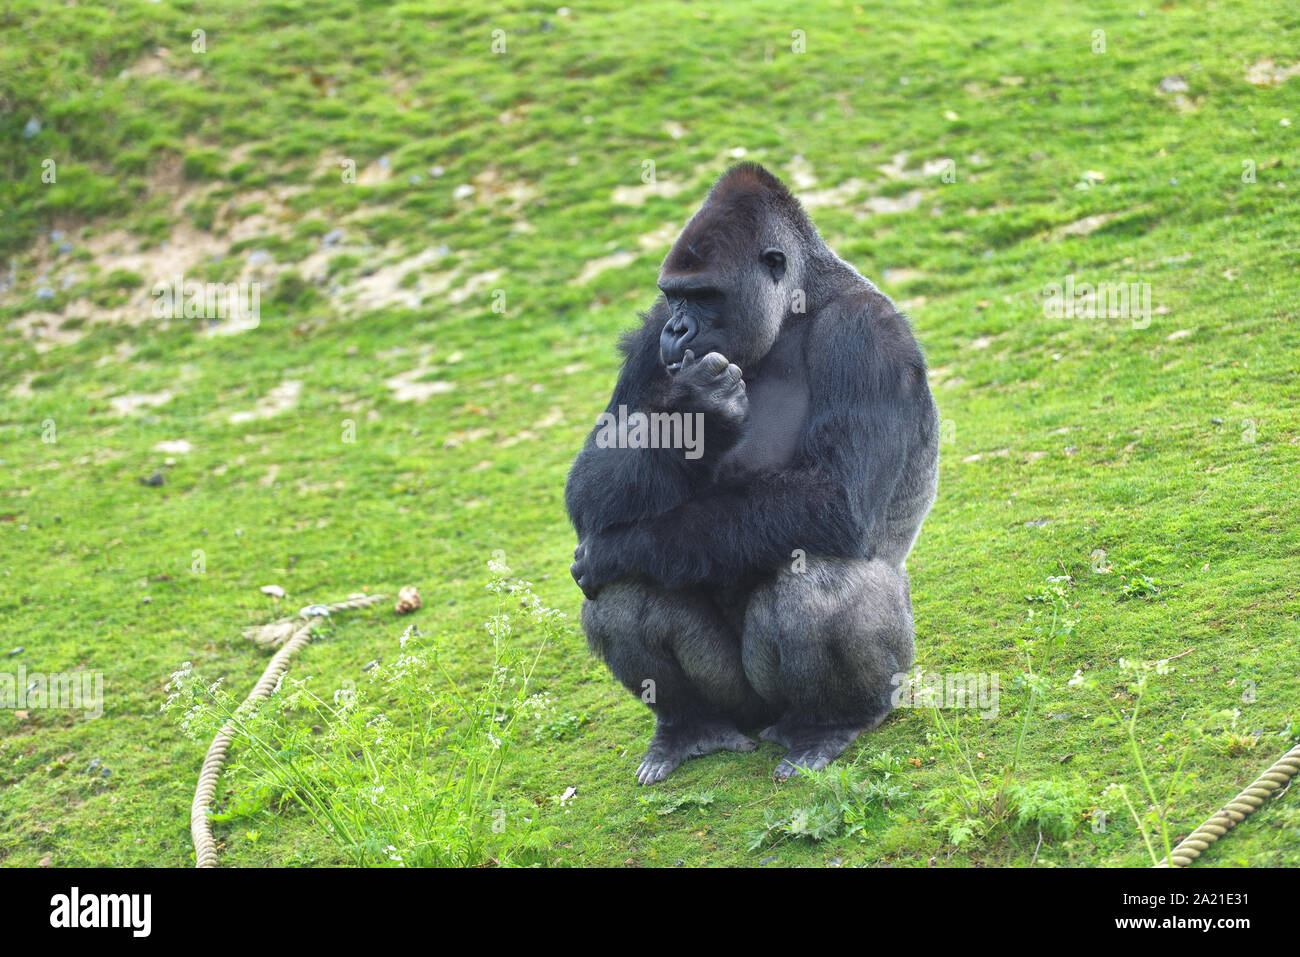 Adult gorilla in green grass Stock Photo